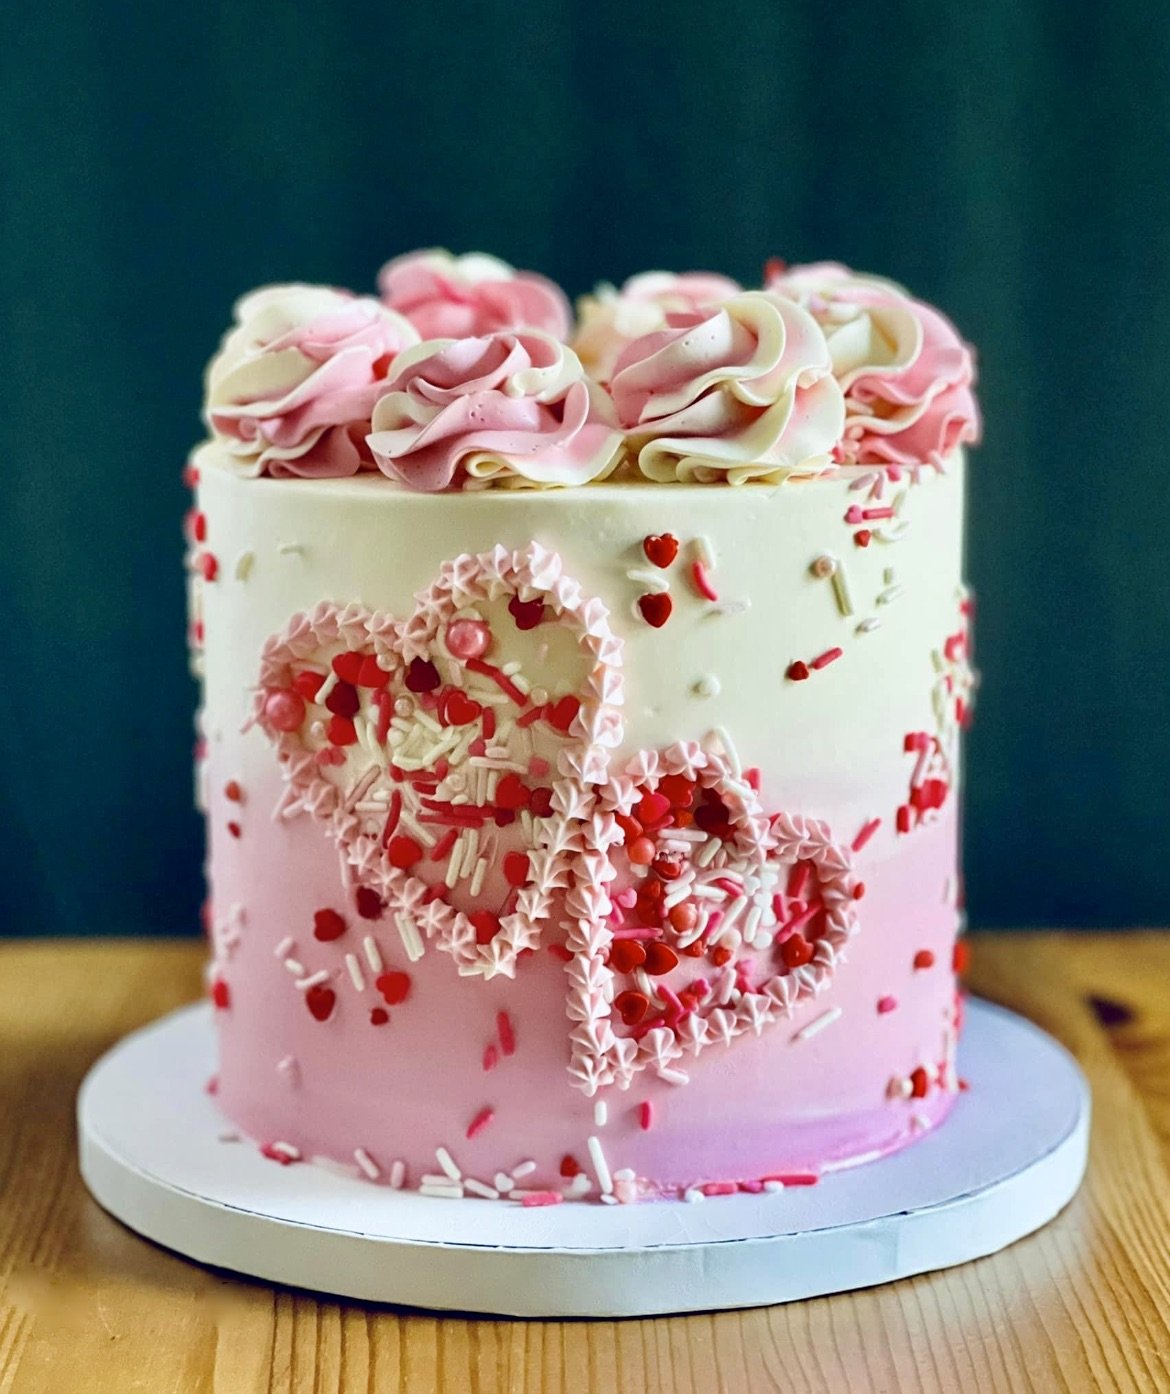 Adorable DIY Moana Cake Design Ideas - Amycakes Bakes-thanhphatduhoc.com.vn